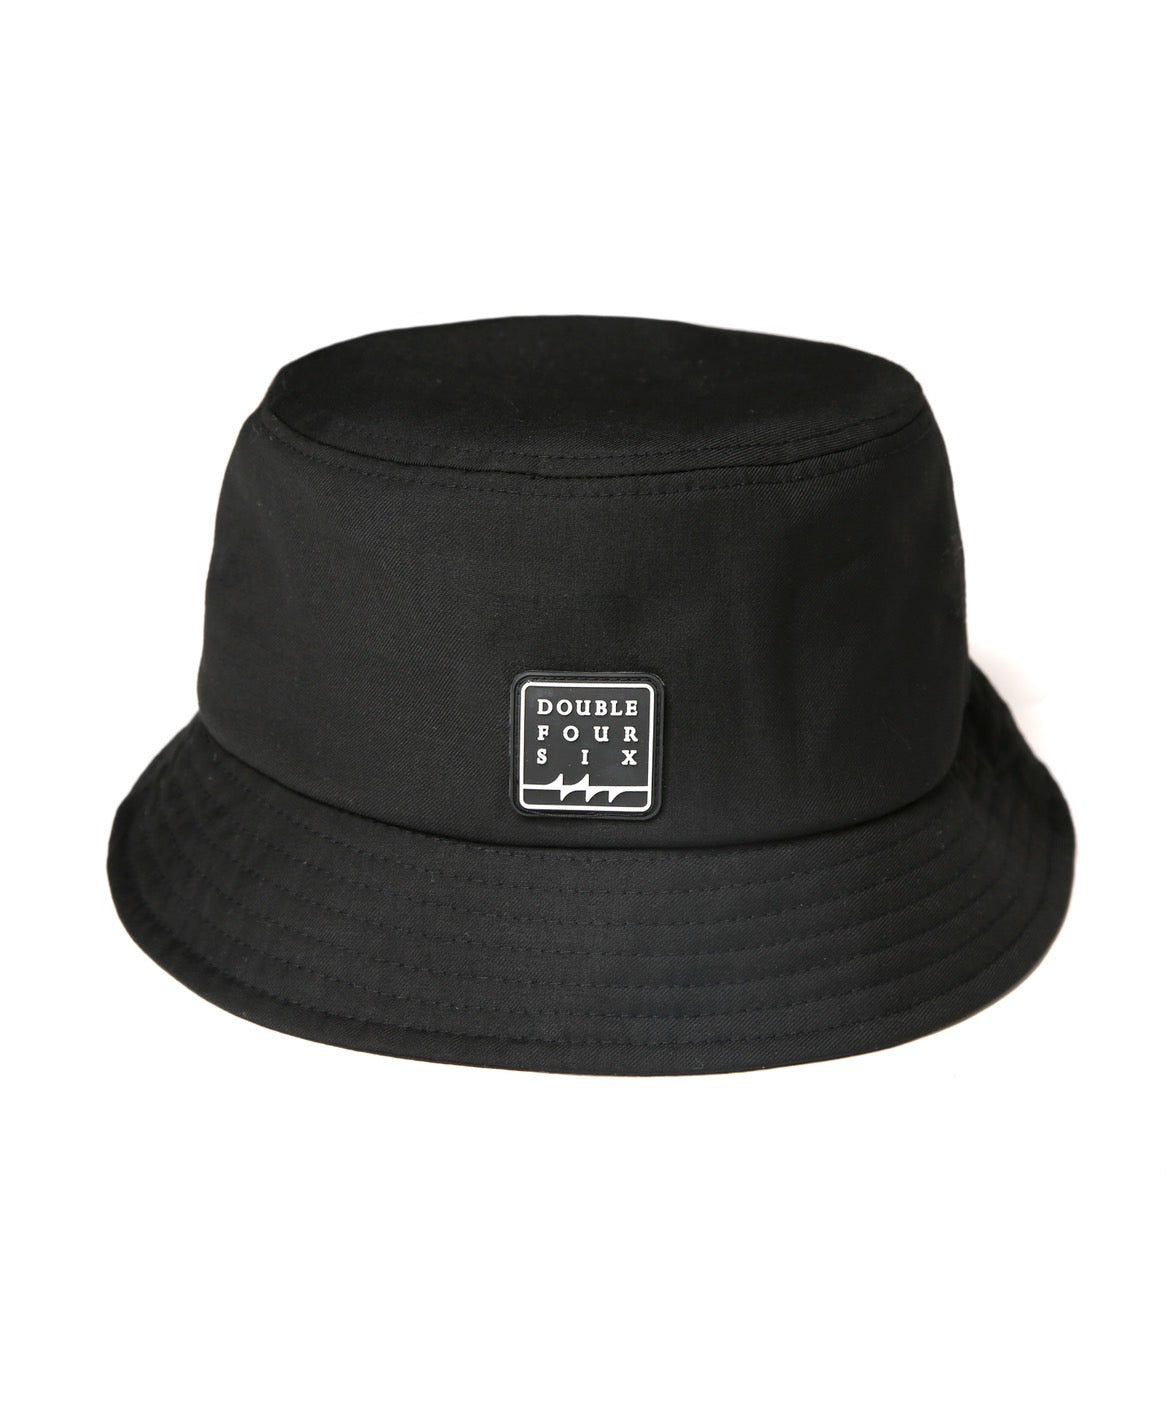 数量限定商品】DOUBLE FOUR SIX- Rubber Emblem Bucket Hat – 446 